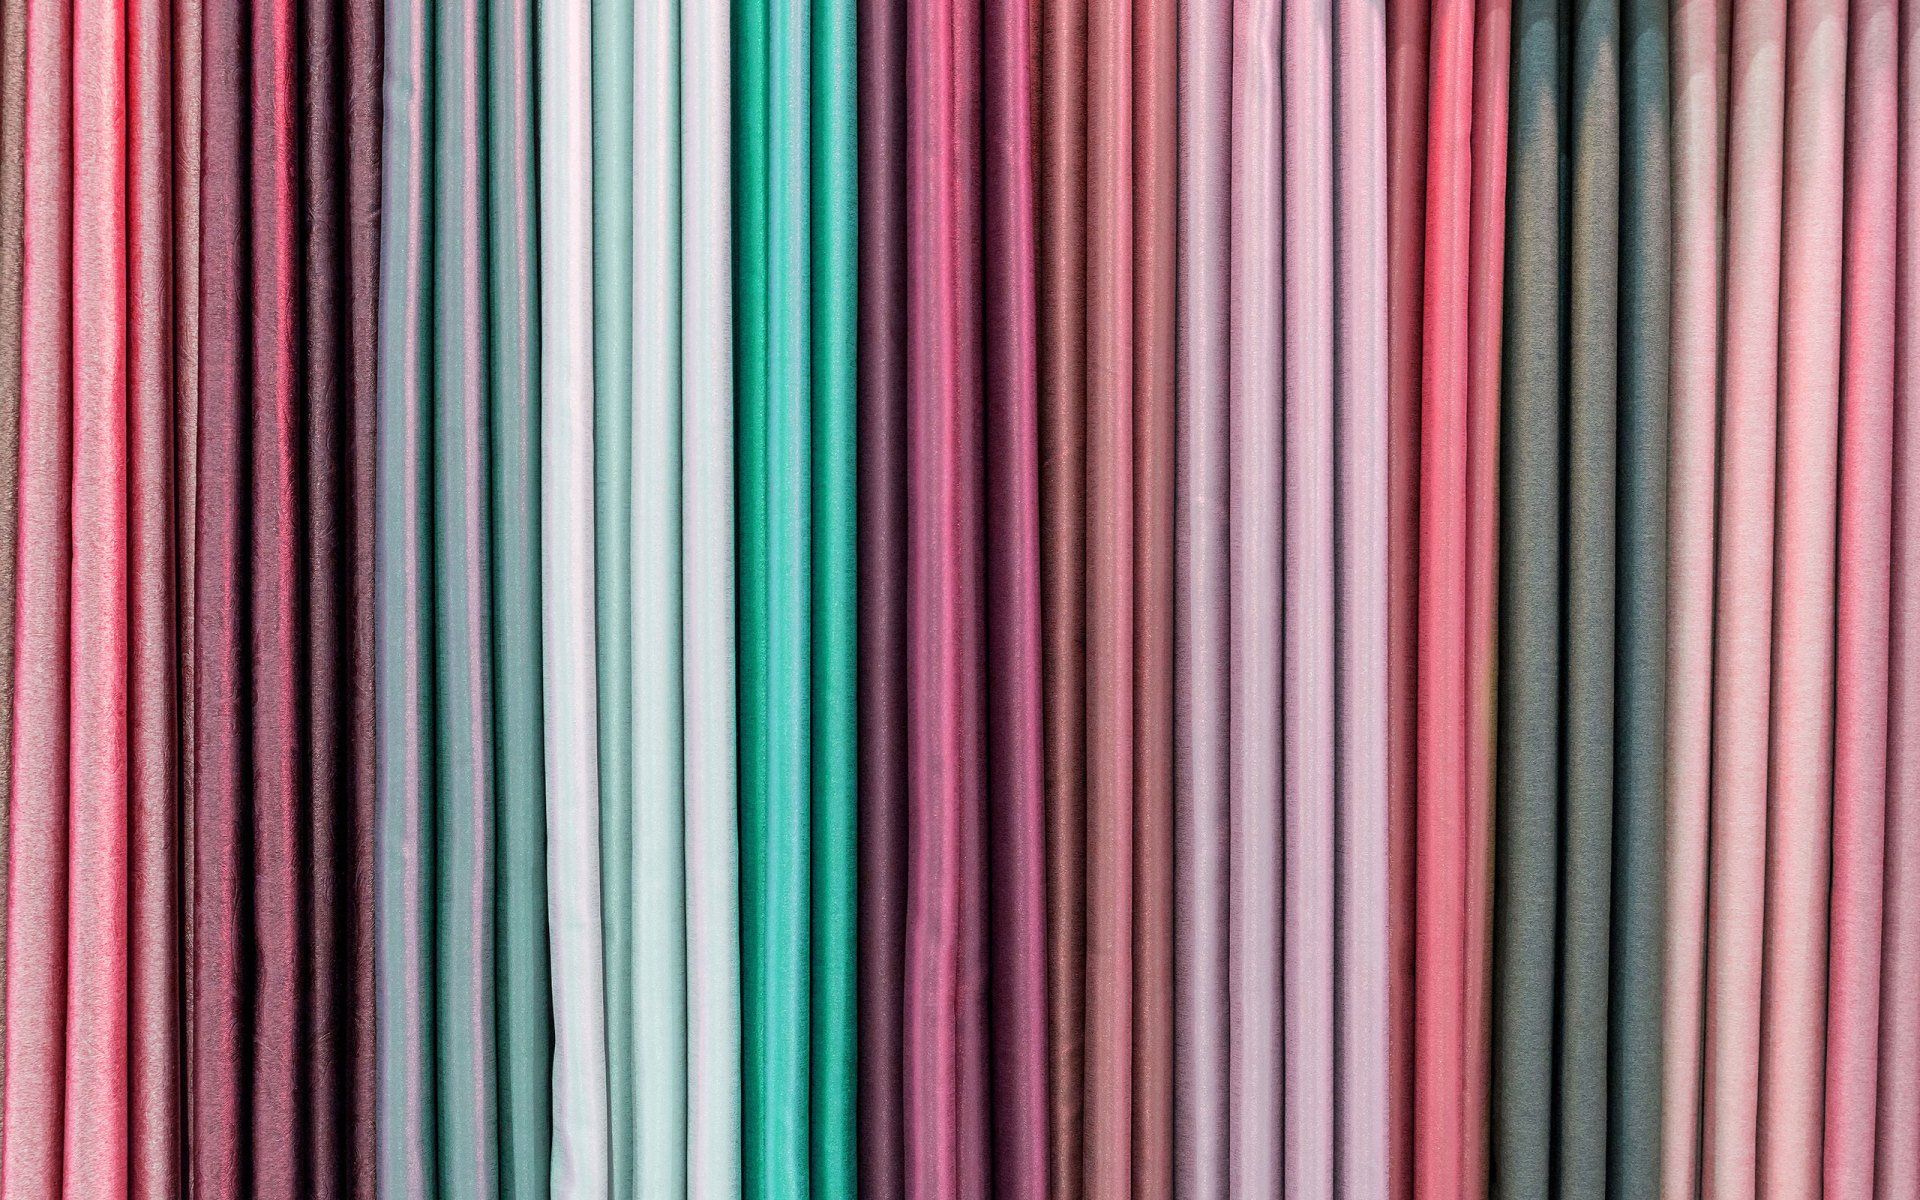 Colorful drapes